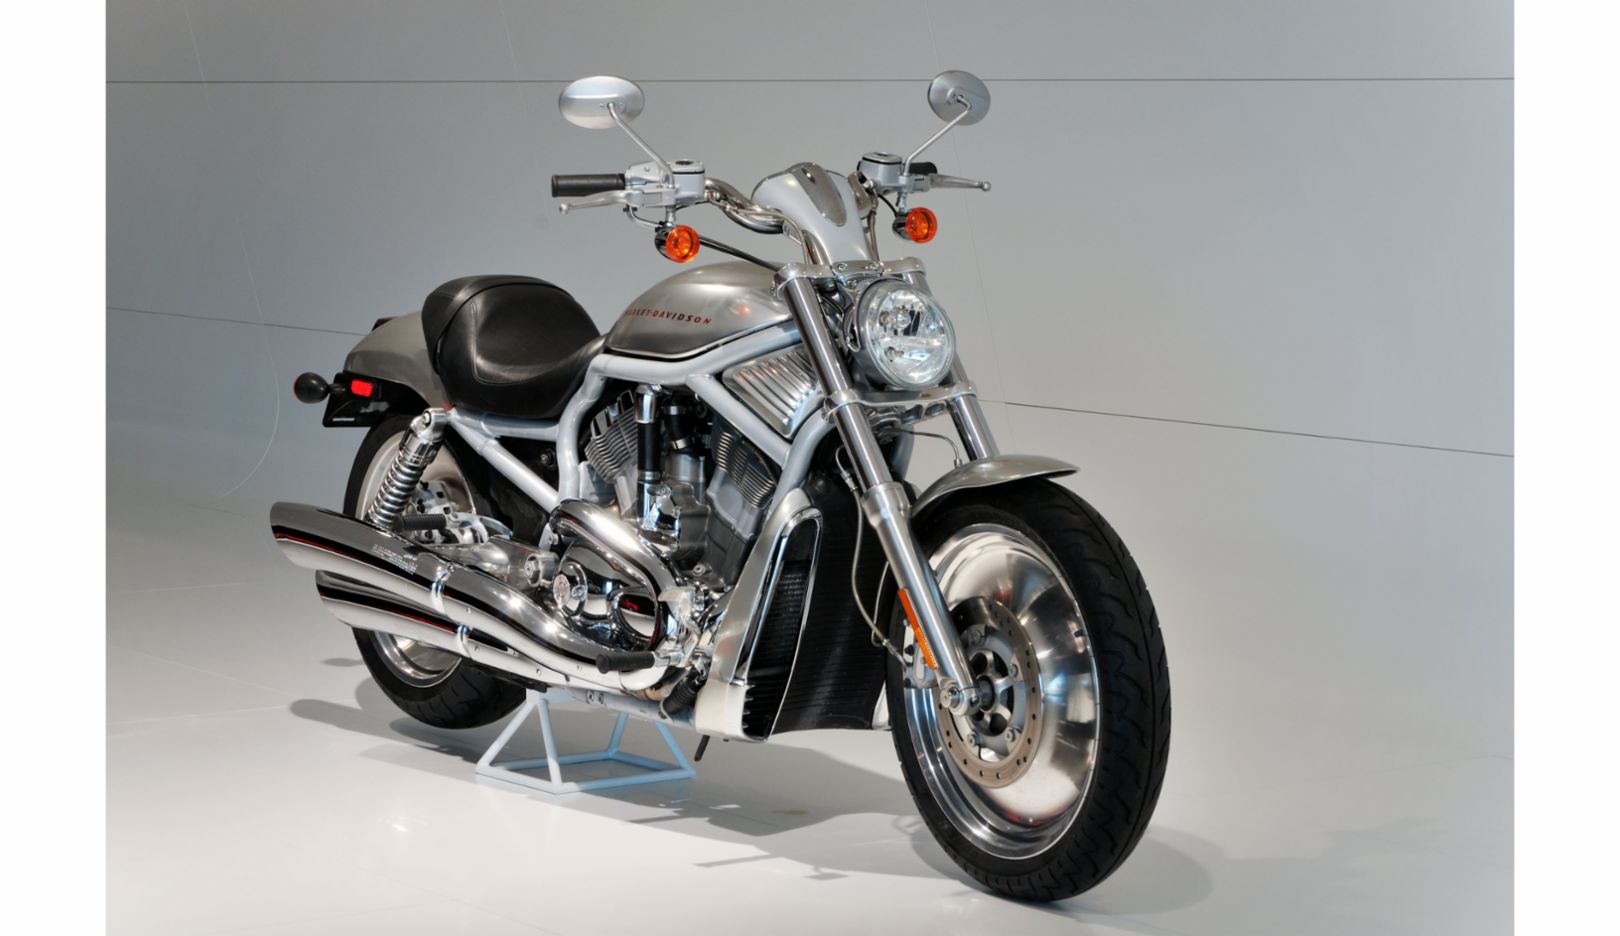 2001 – a revolutionary engine for Harley-Davidson: